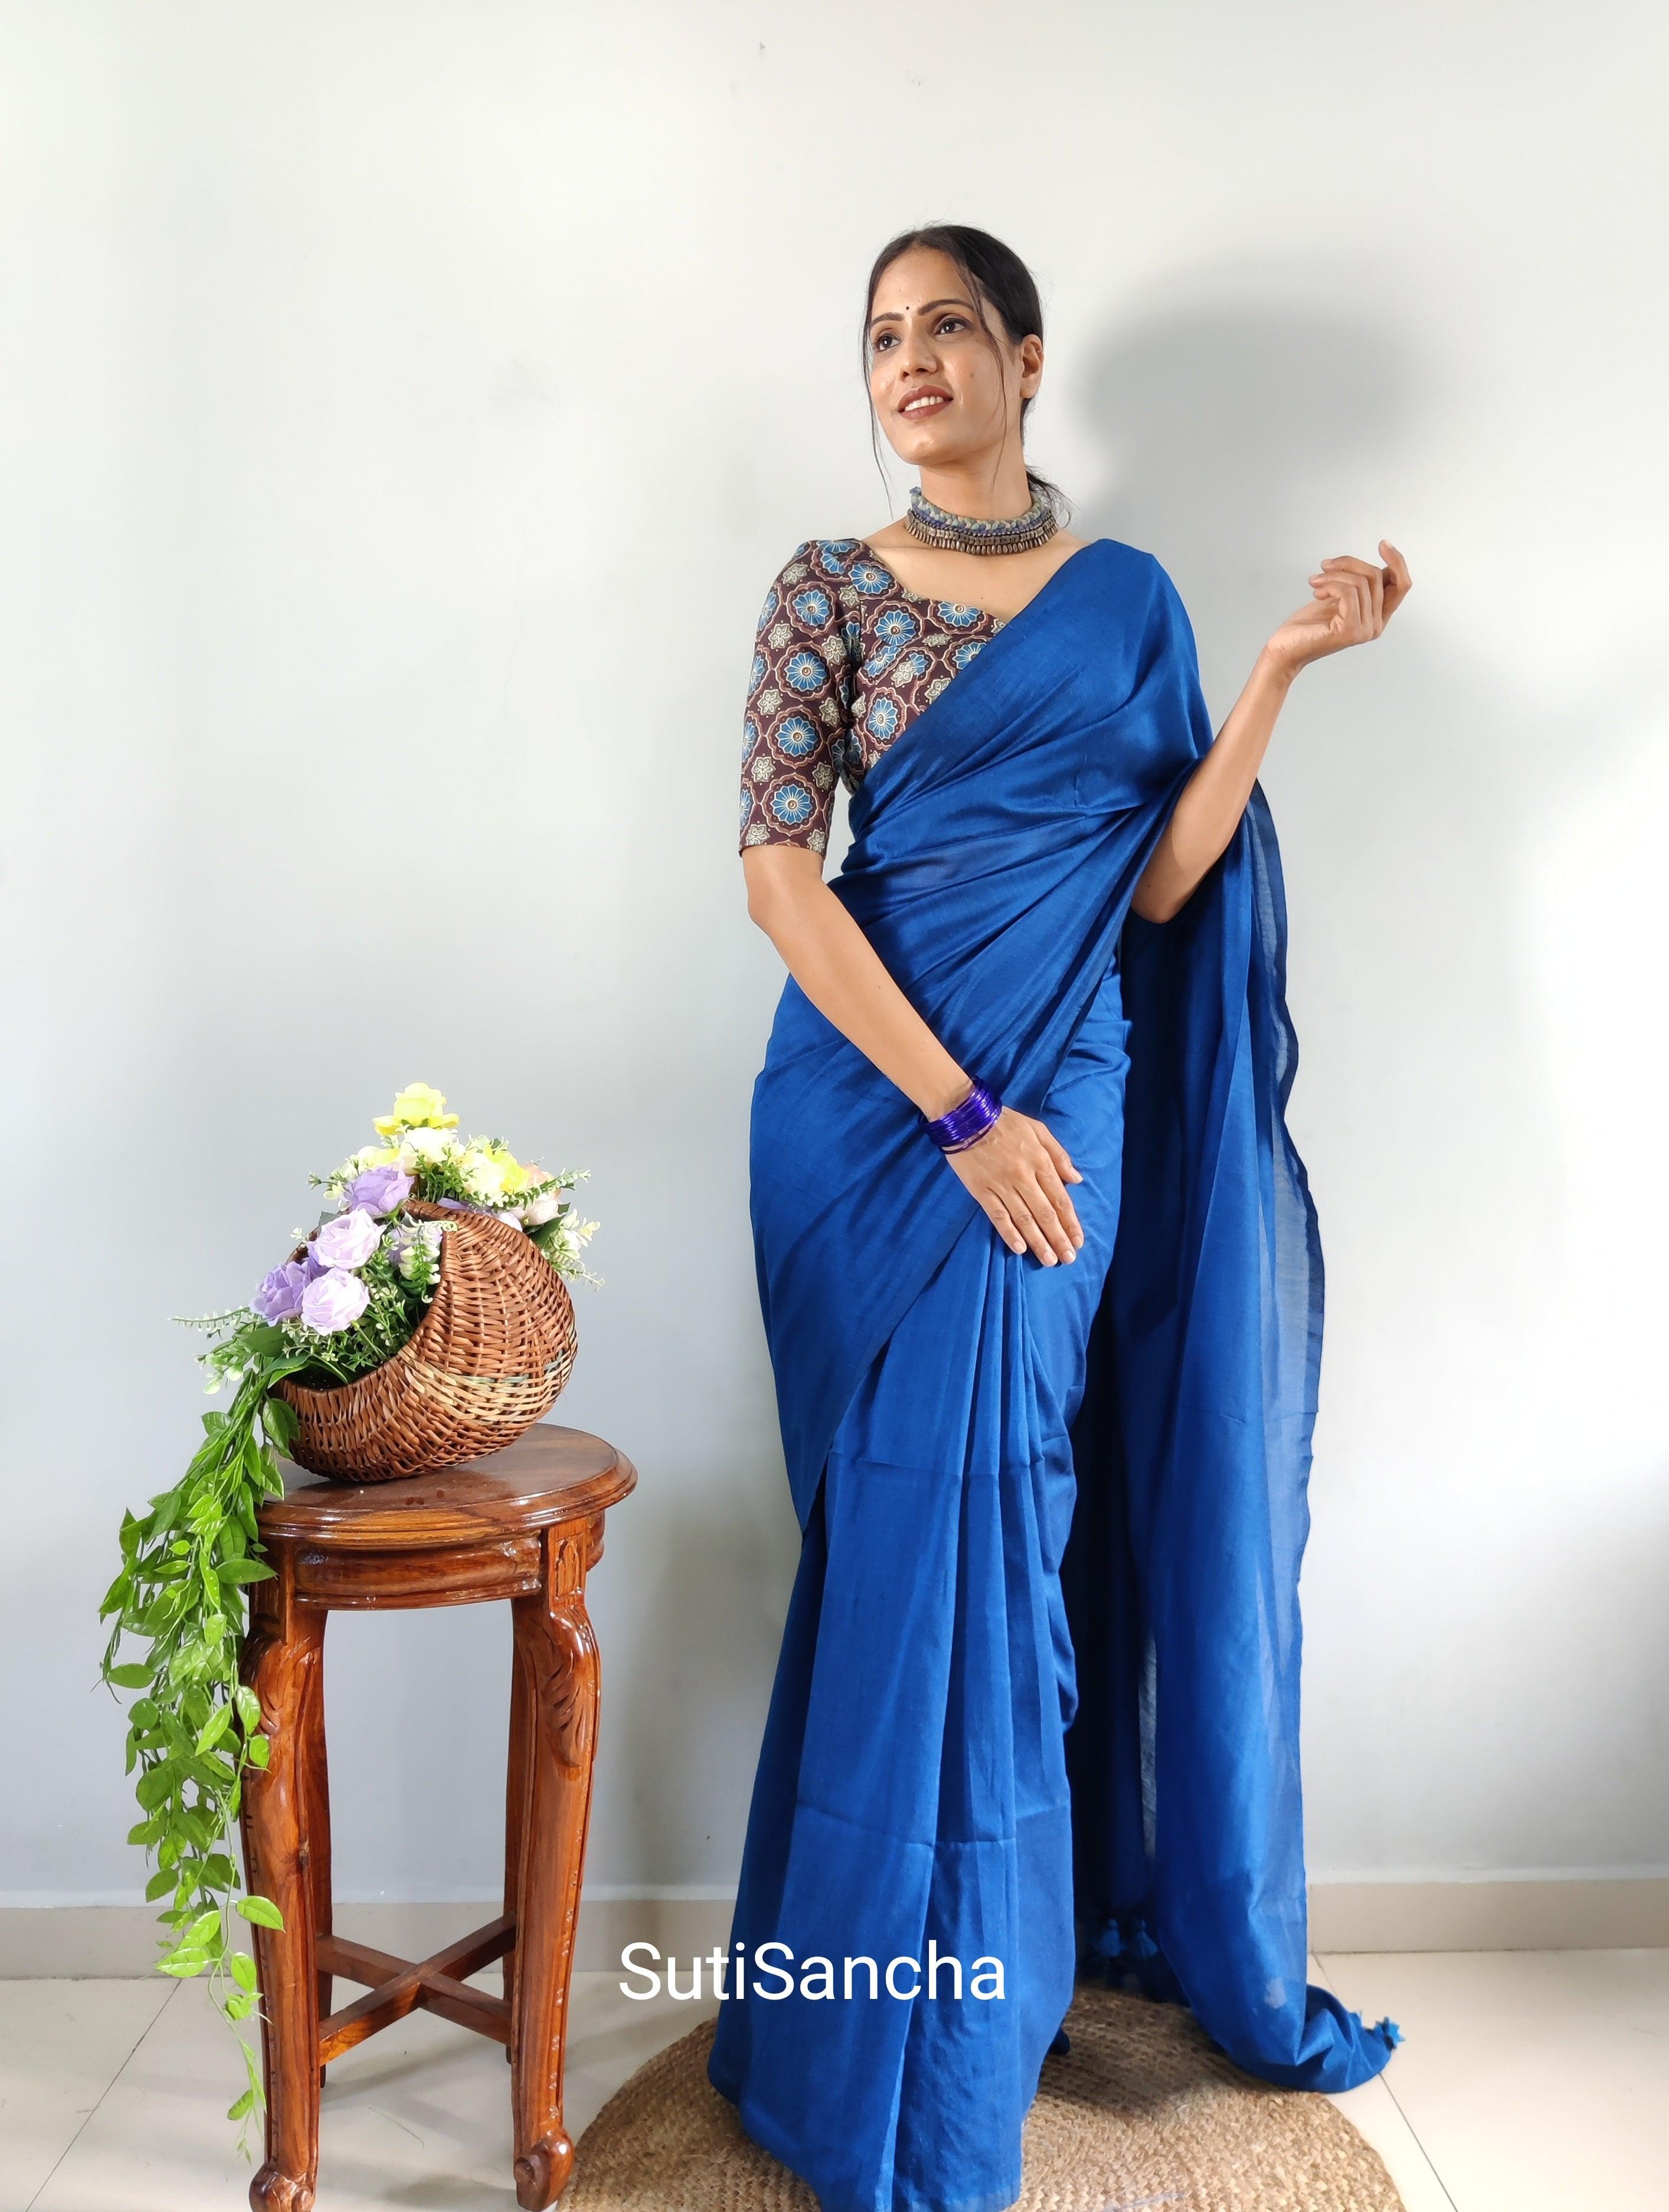 Sutisancha indigoblue Khadi Saree & designer Blouse - Suti Sancha